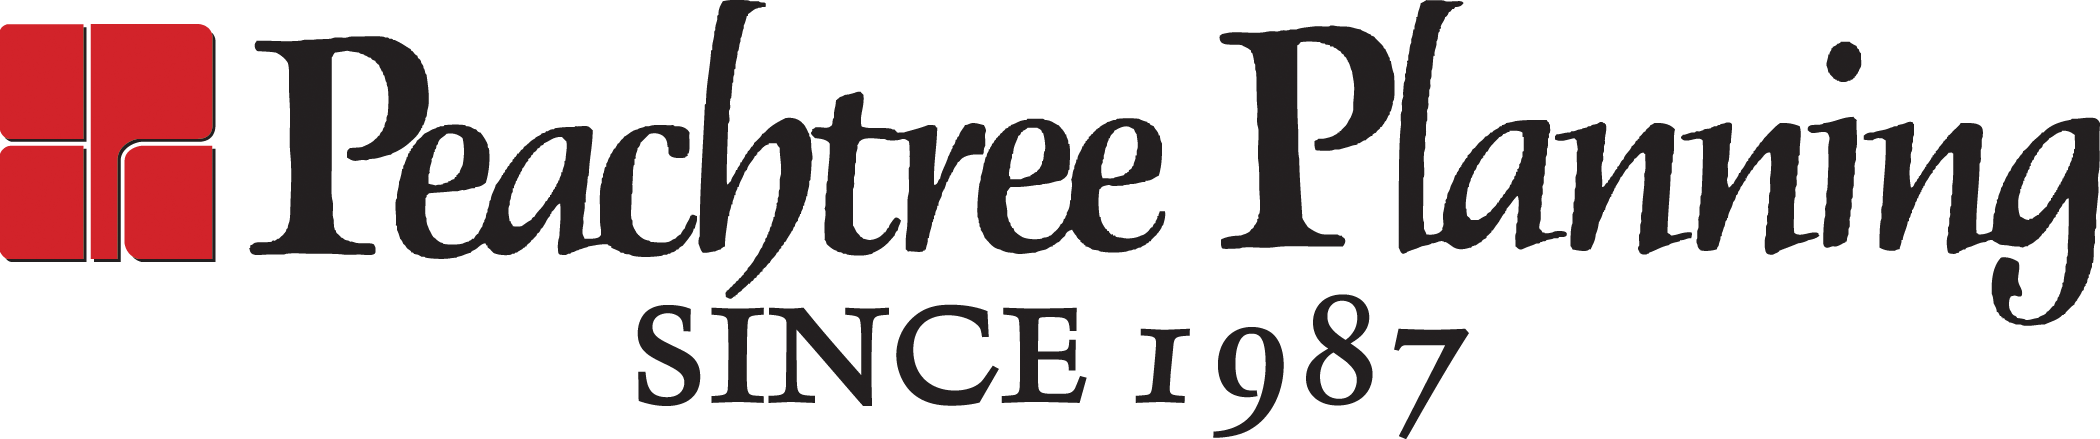 Peachtree Planning Company Logo